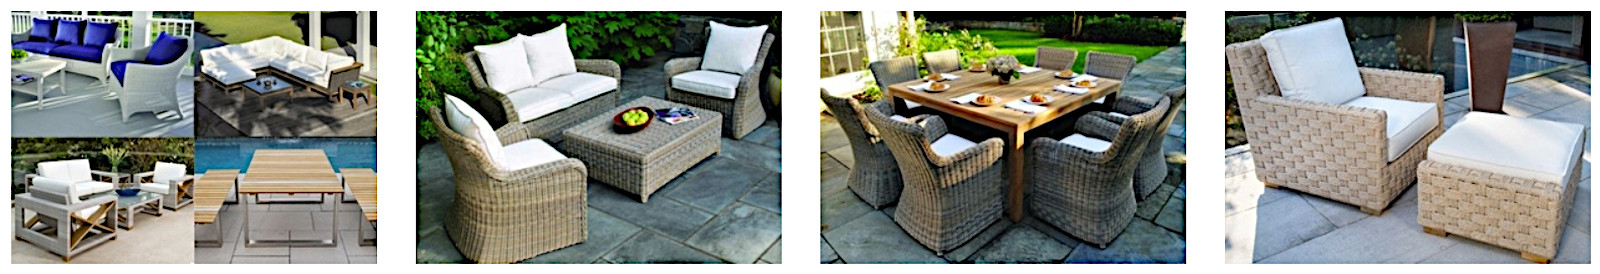 Kingsley Bate teak garden furniture promo price